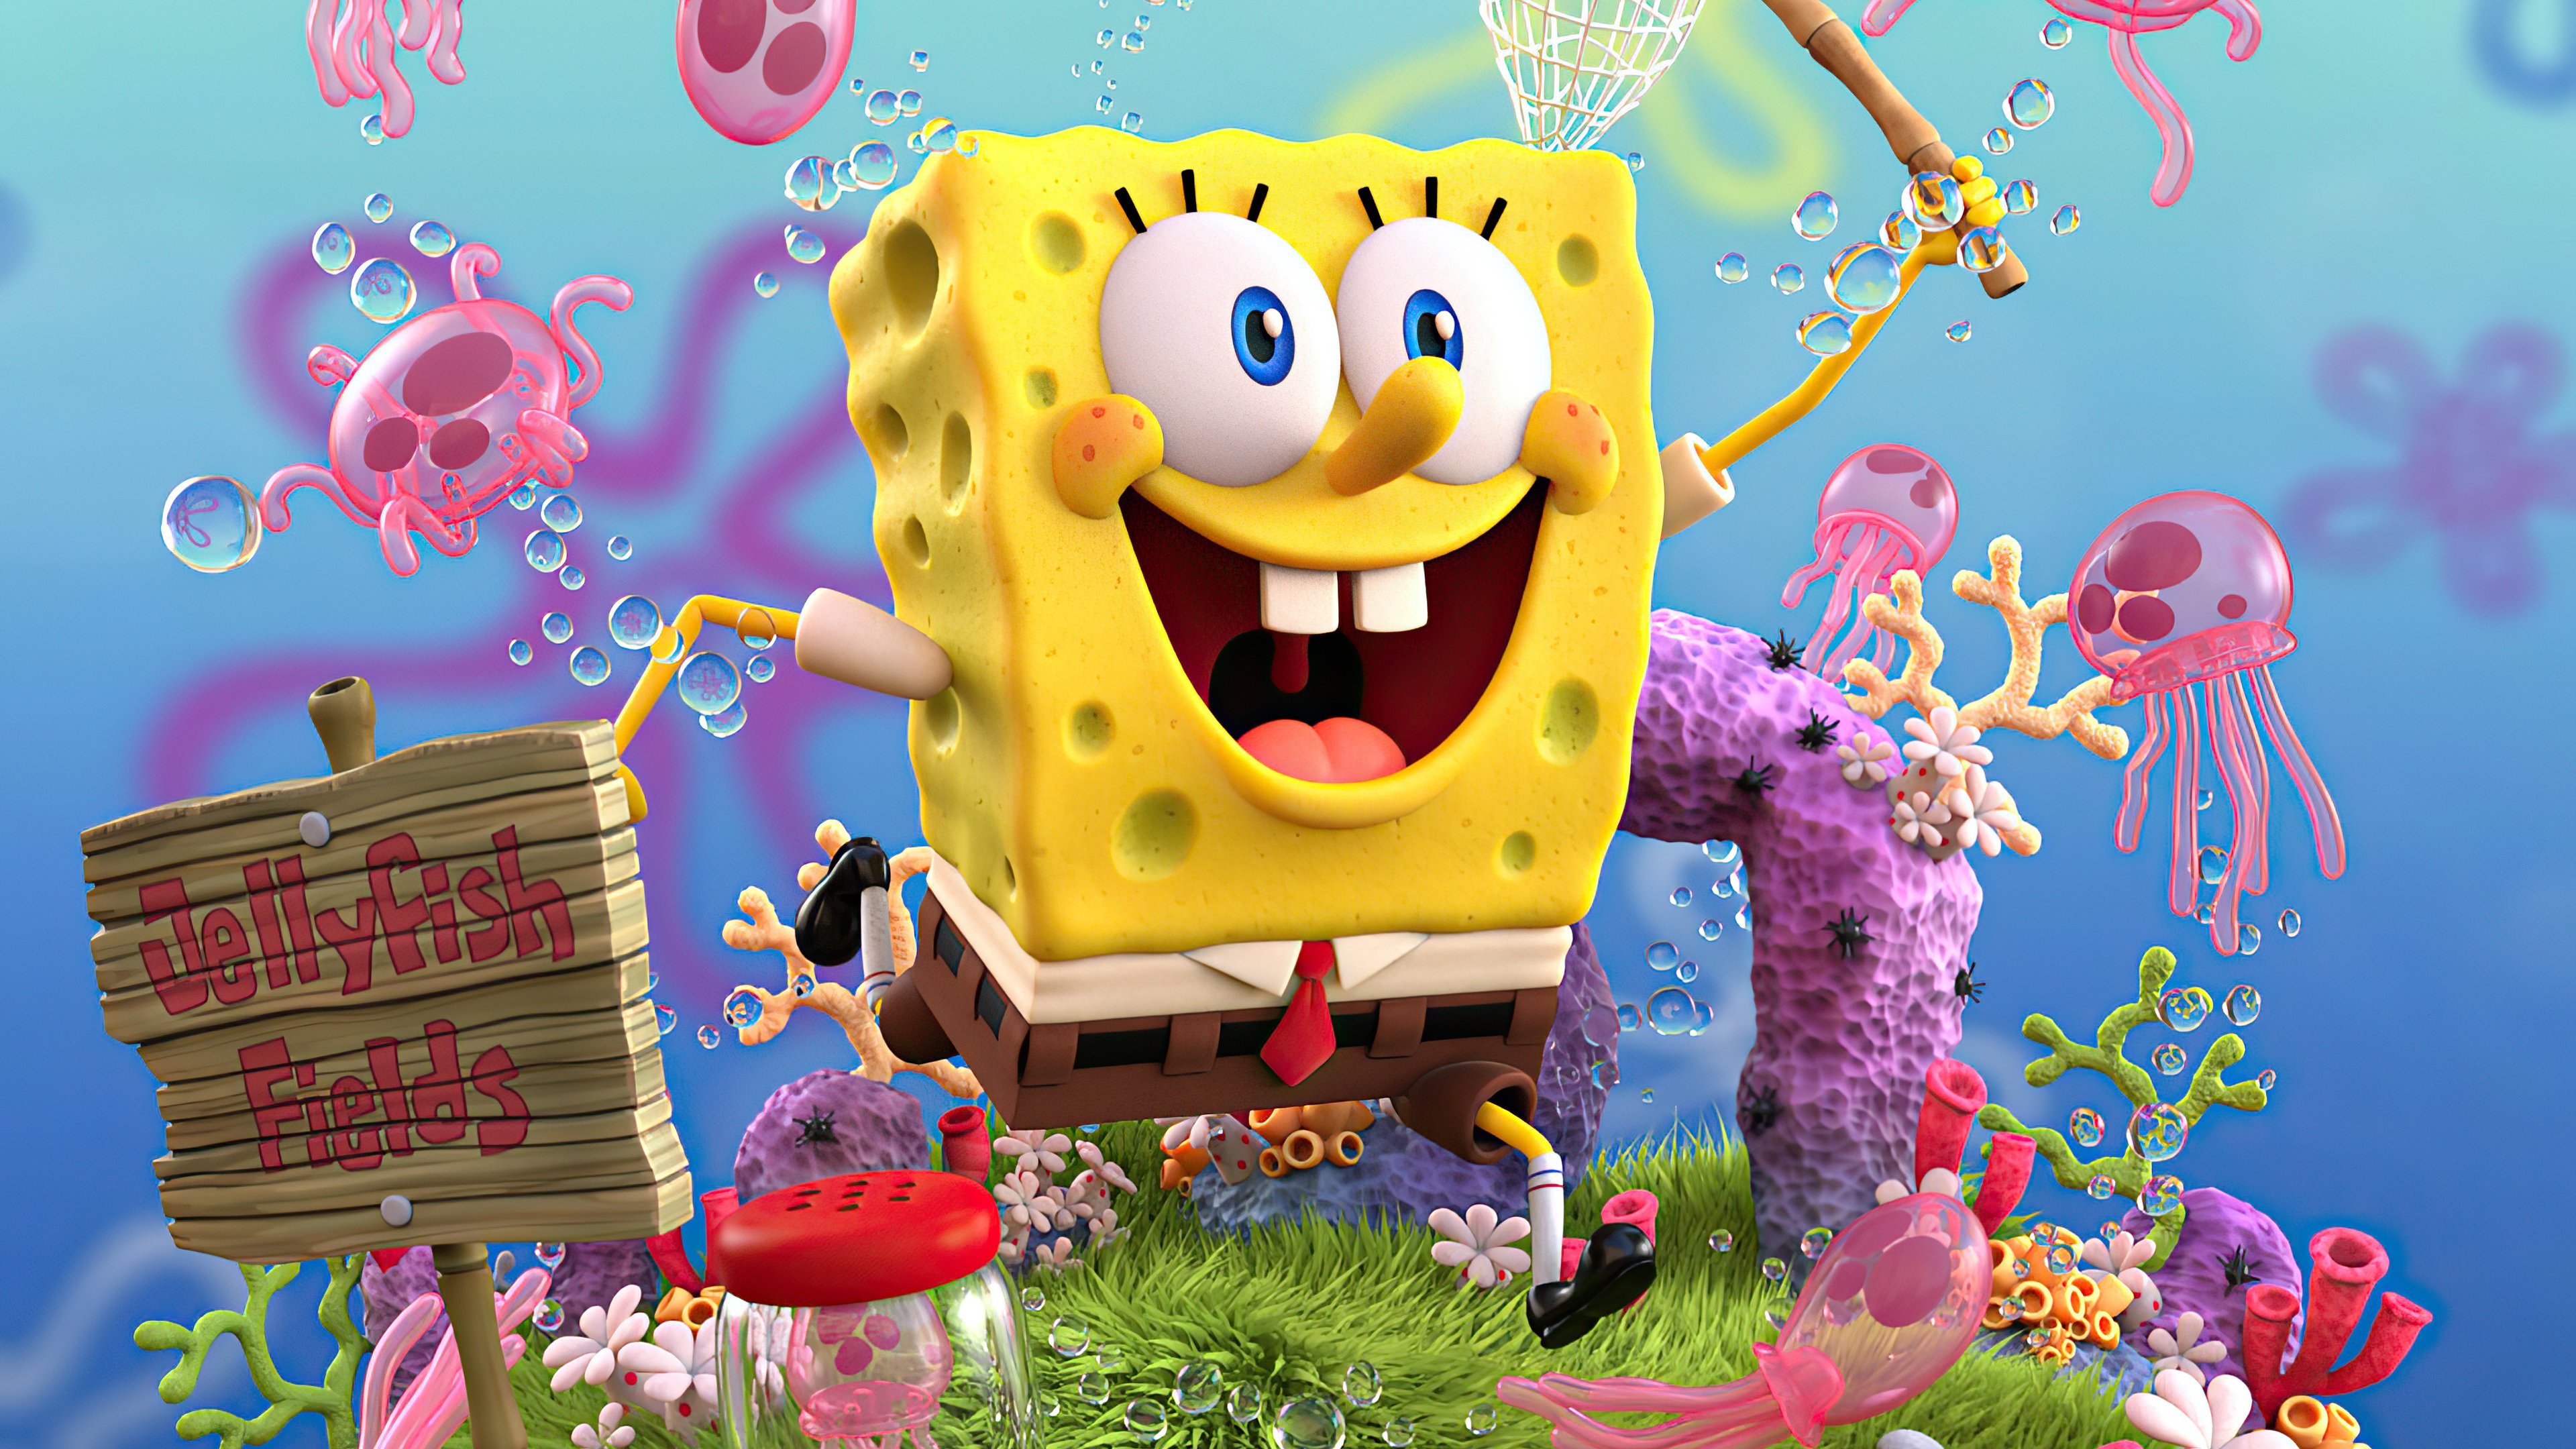 SpongeBob SquarePants 4k 2020, HD Cartoons, 4k Wallpapers, Image, Backgroun...